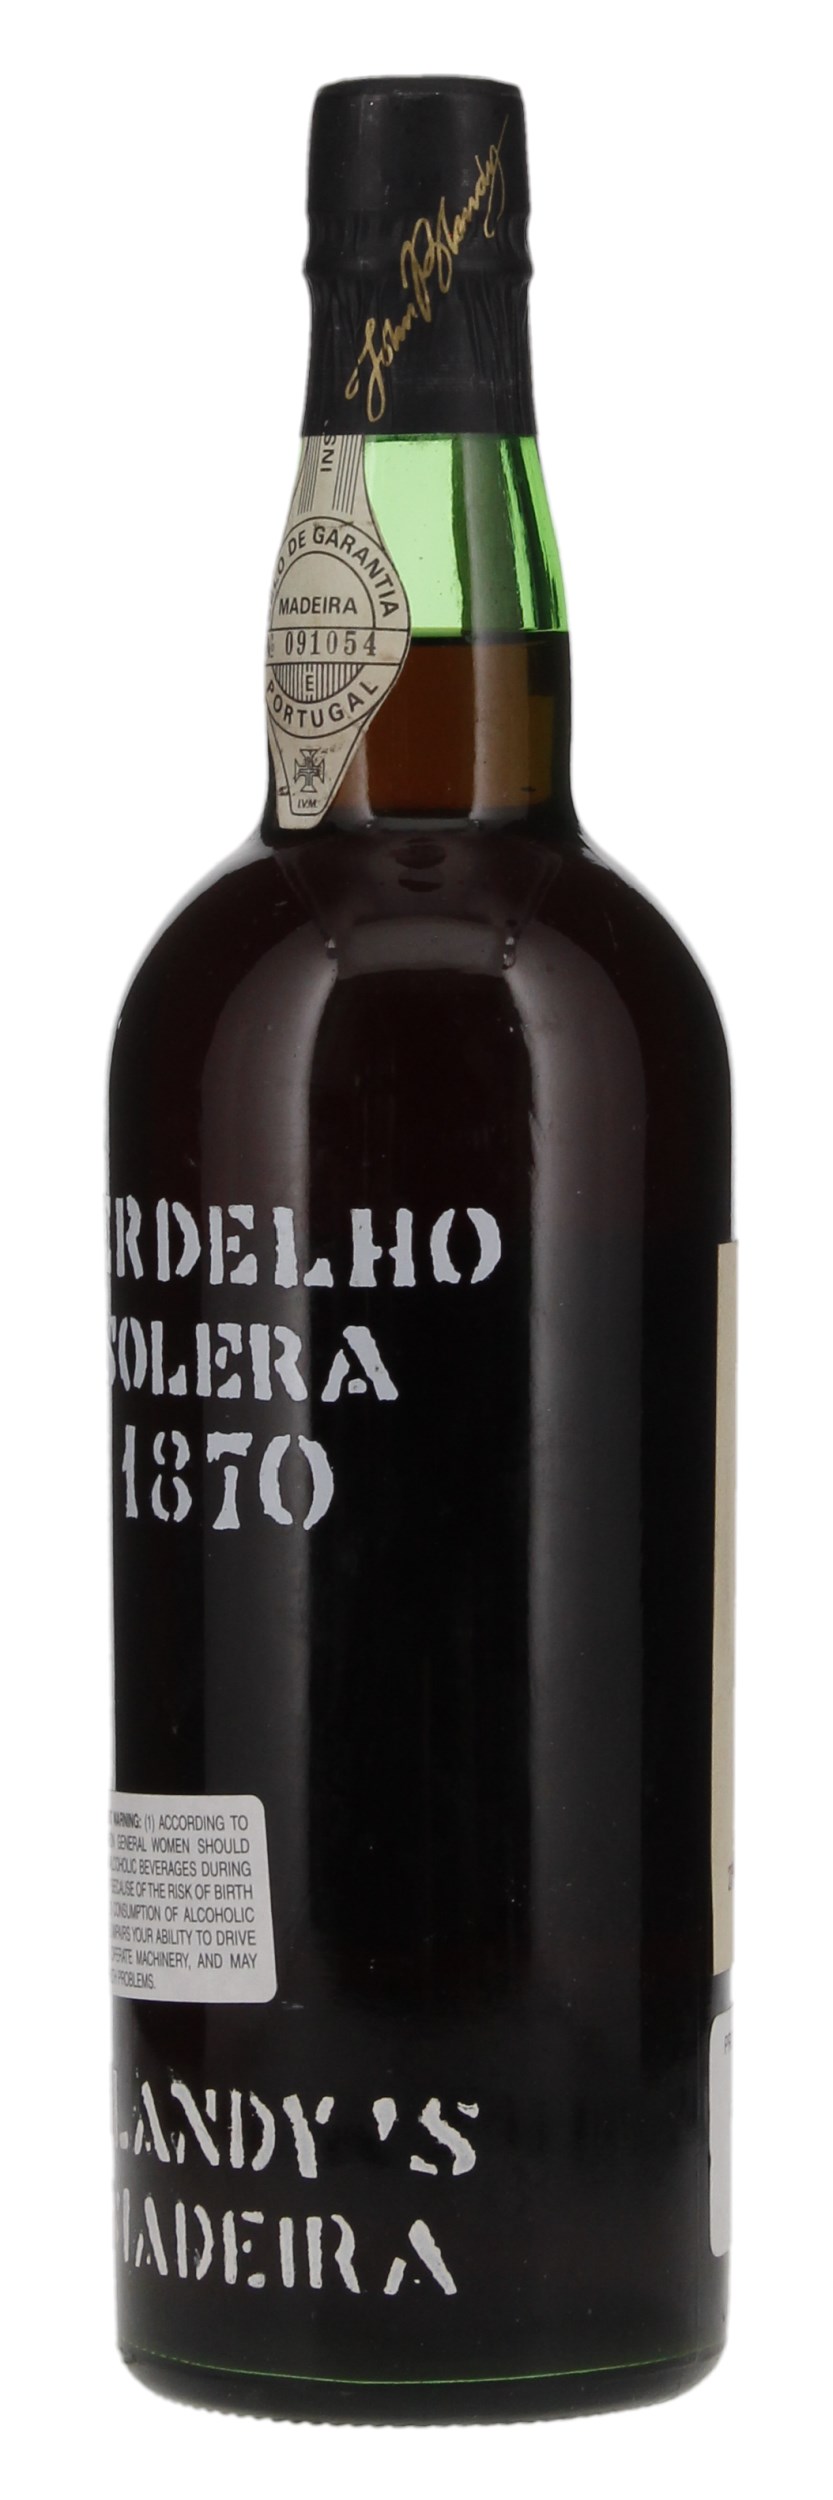 N.V. Blandy's Verdelho Solera 1870 Madeira, 750ml